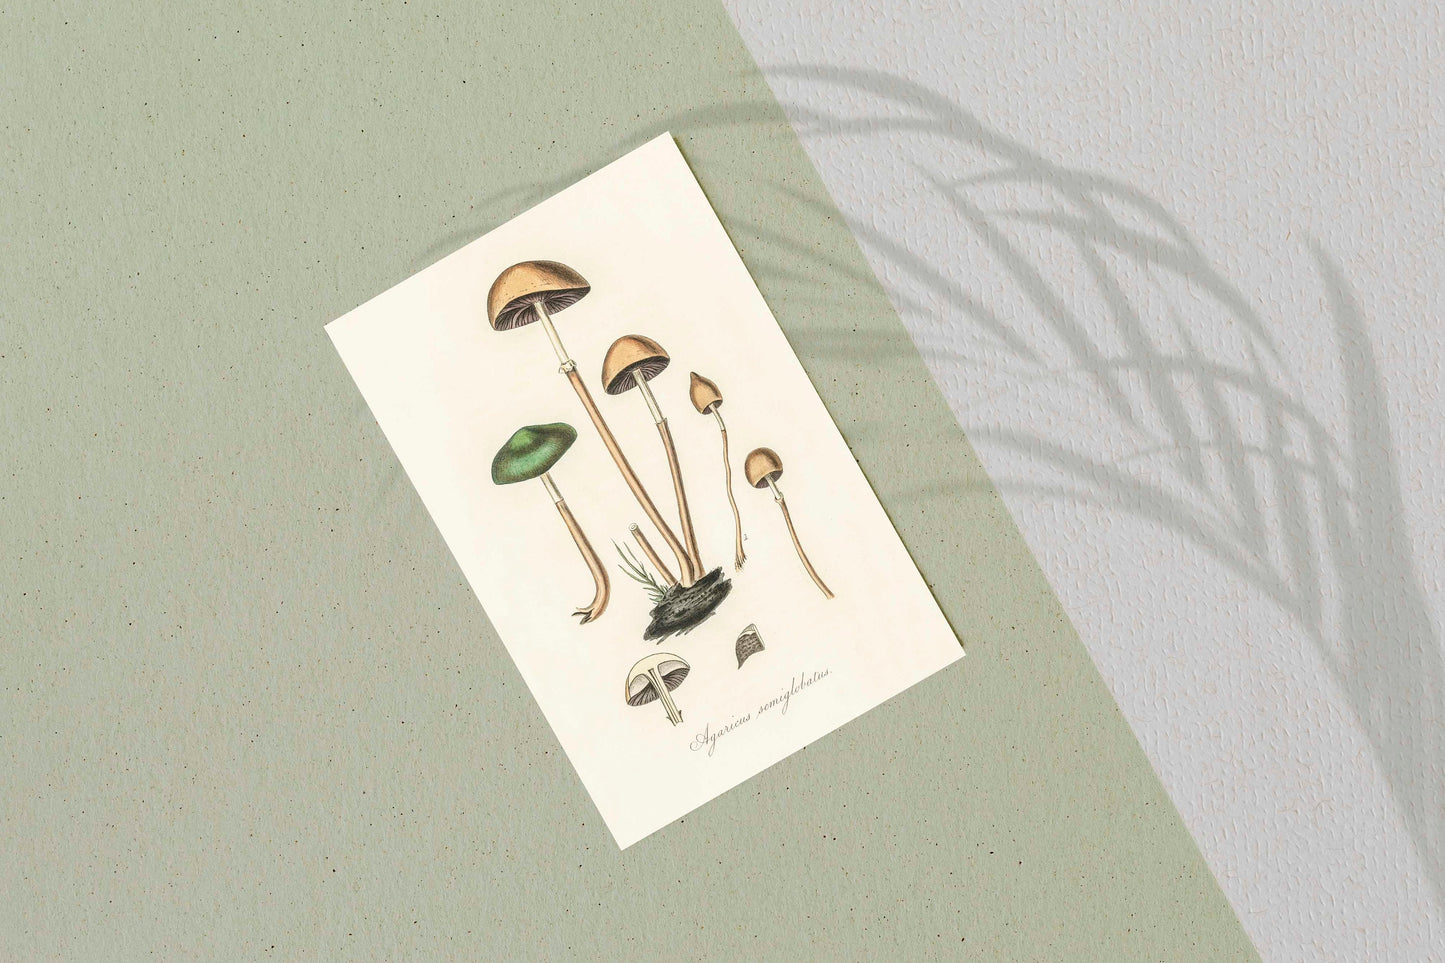 Mushroom fungi Art vintage illustration Poster Wall Hanging Decor